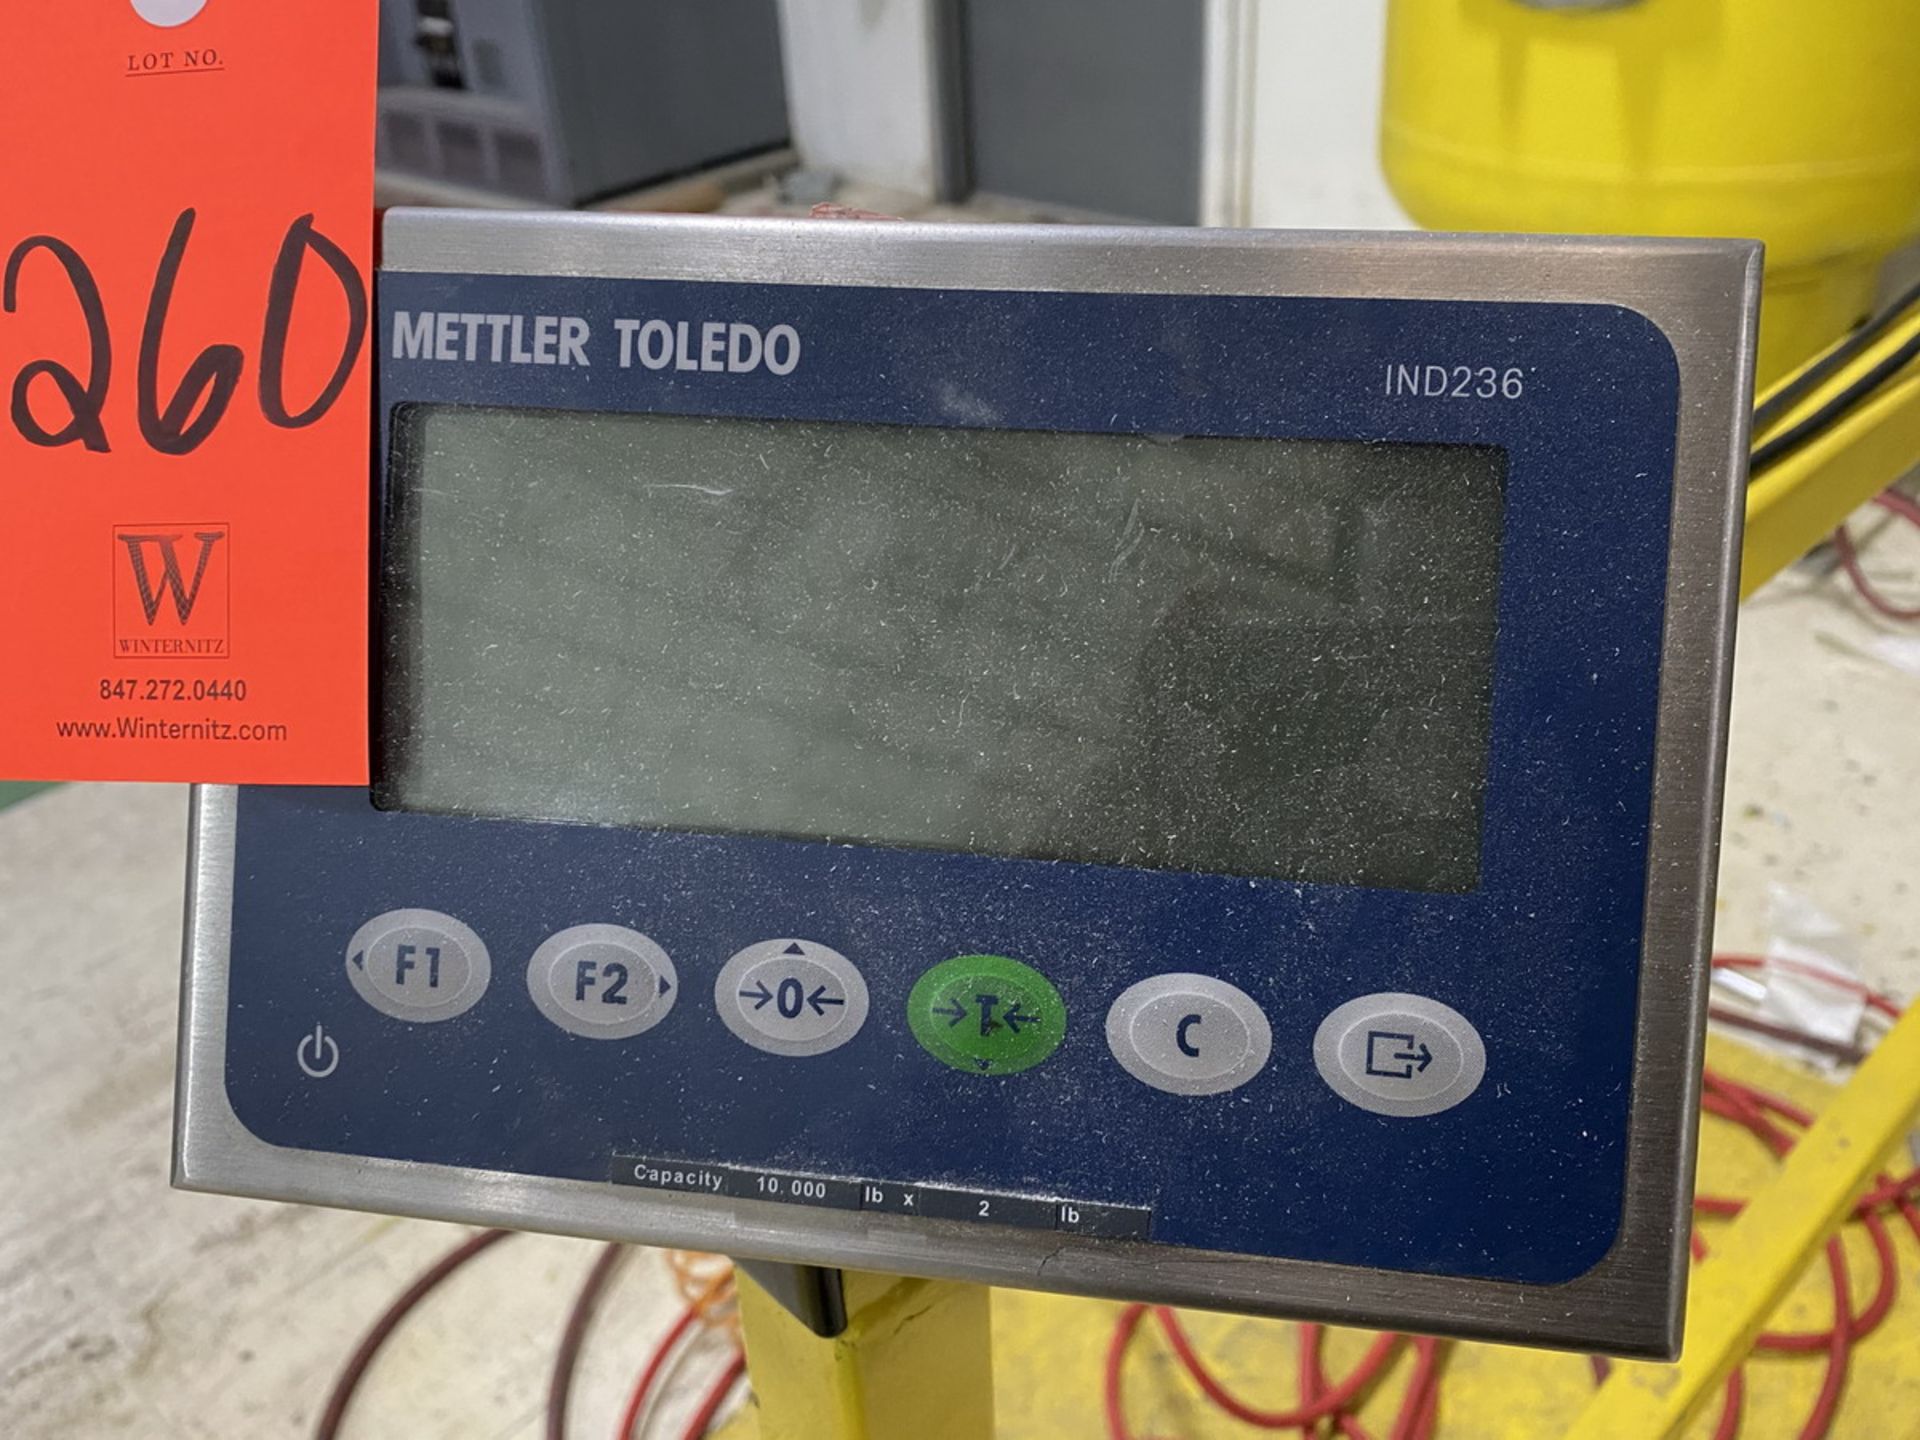 Mettler-Toledo 10,000 lb. Cap. Model IND236 Digital Platform Scale; with 84 in. x 60 in. Platform - Image 3 of 3